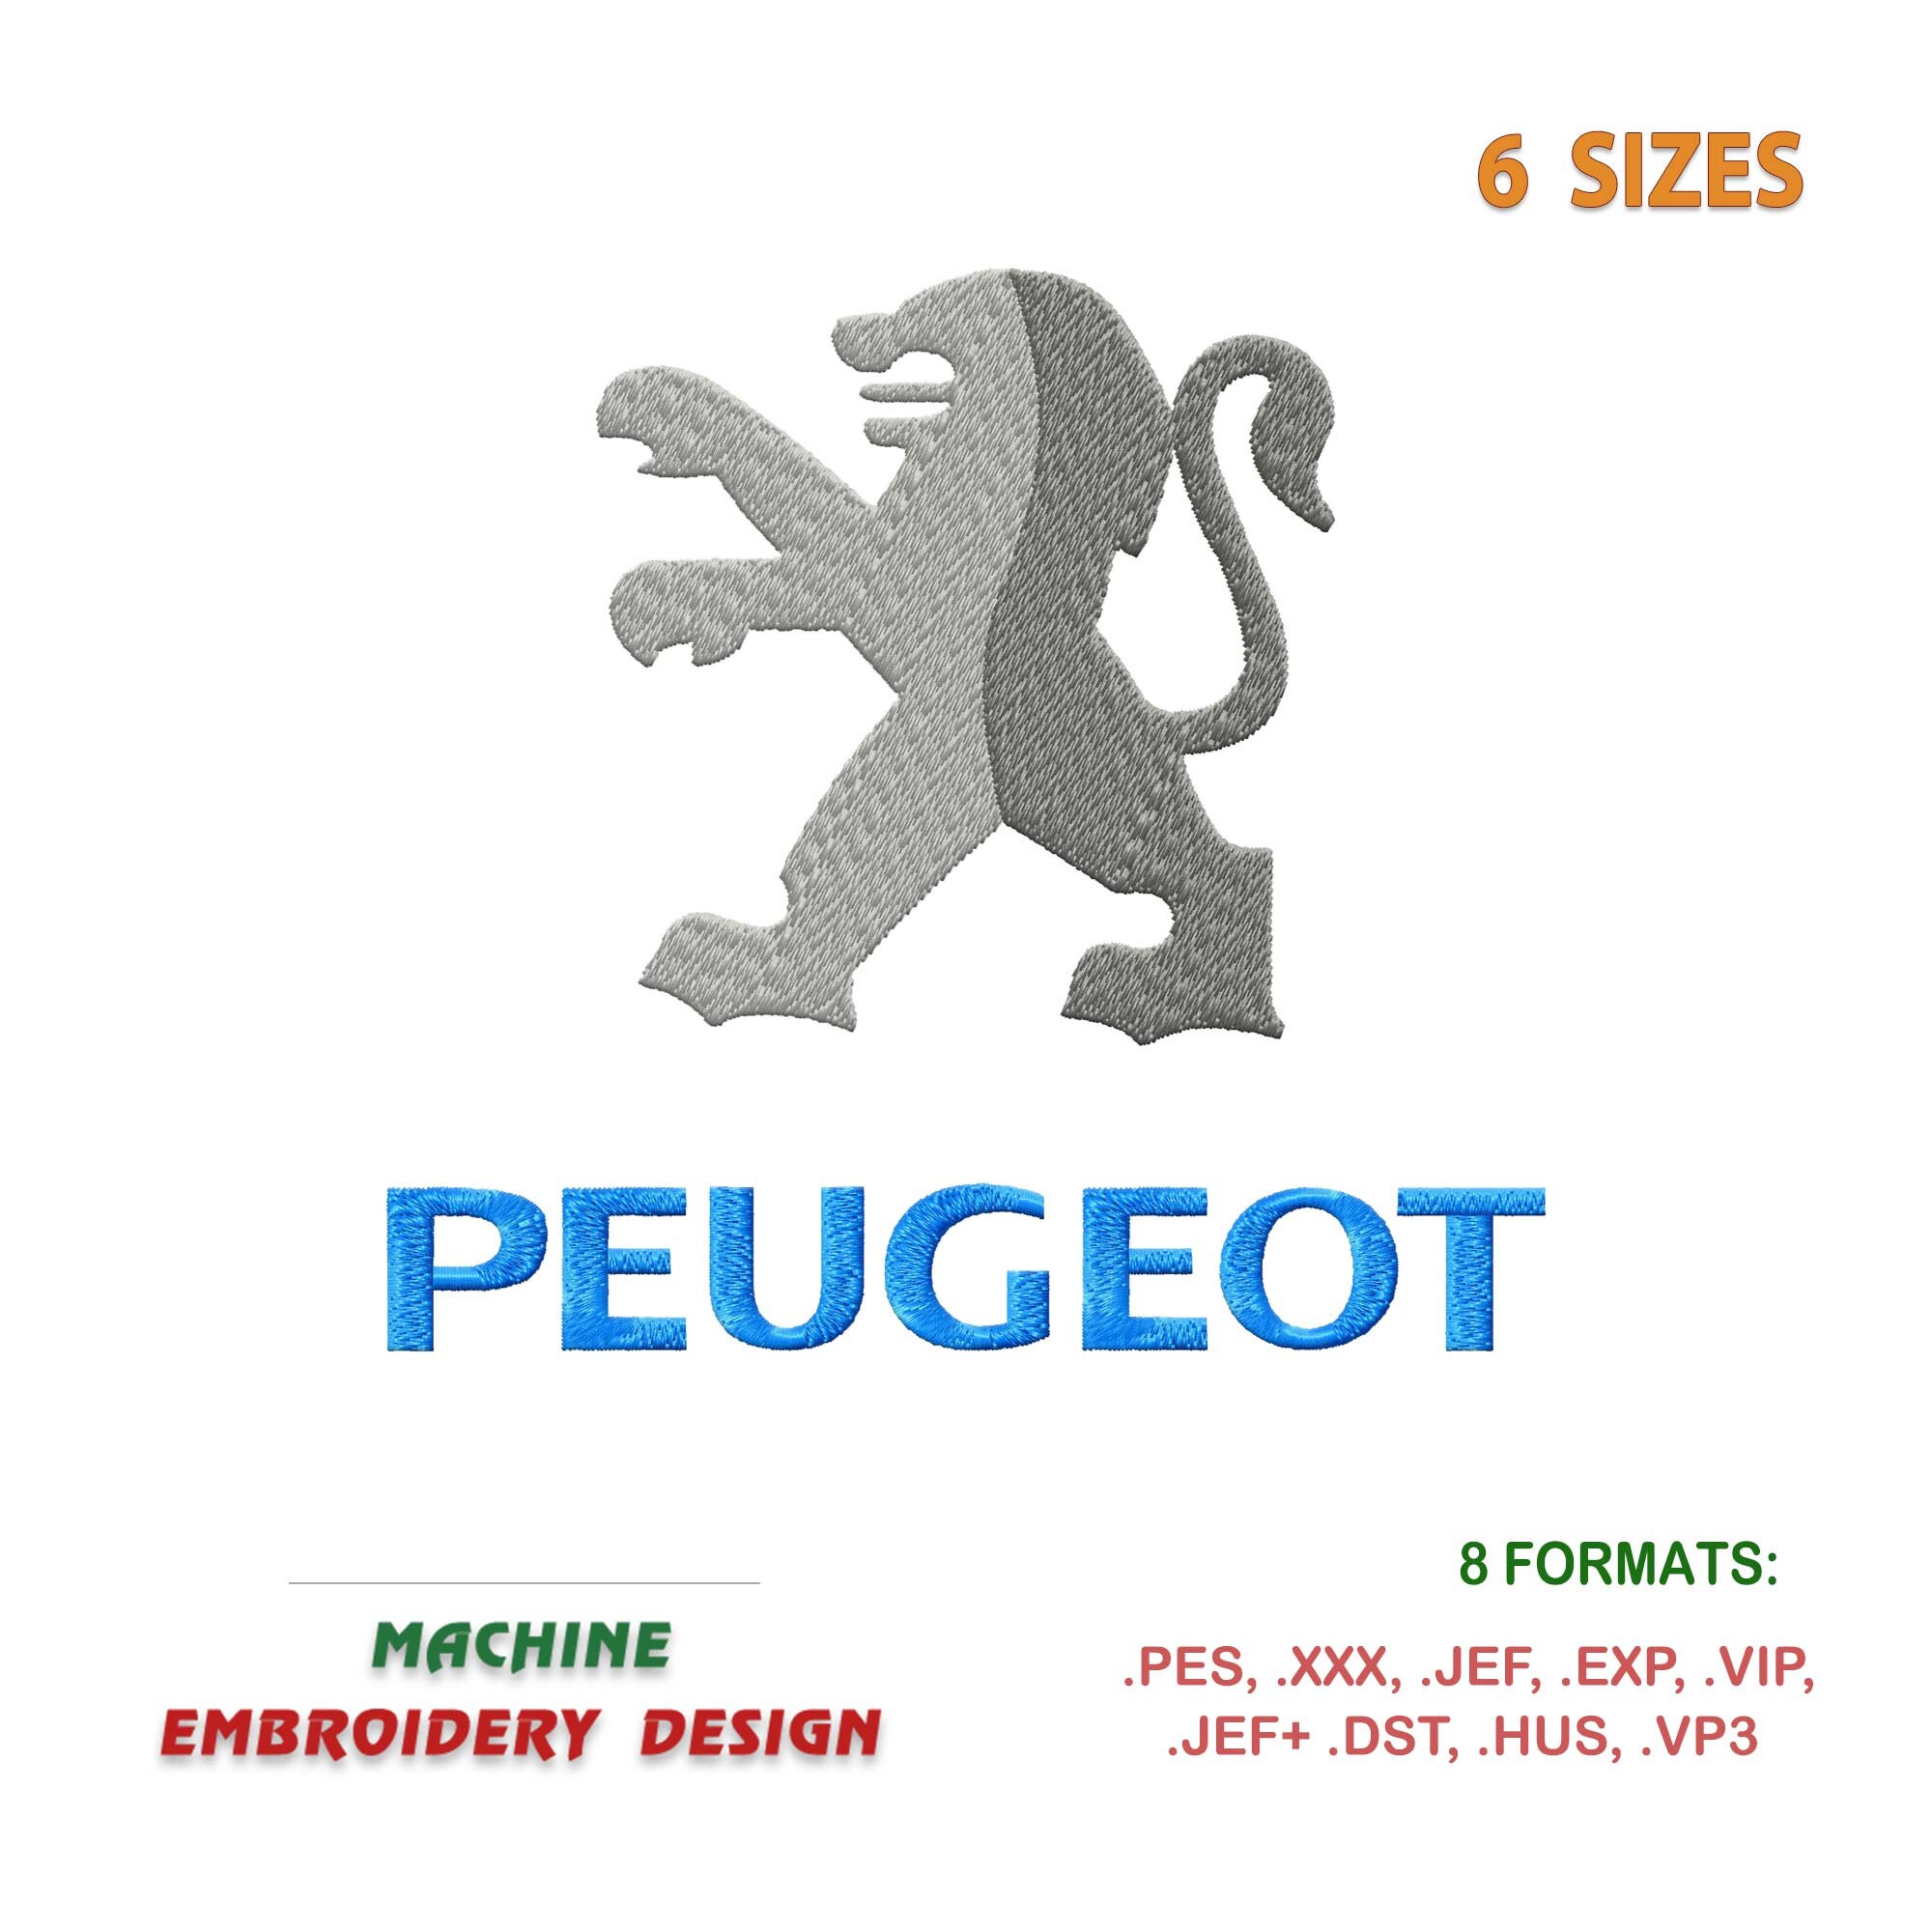 1 x Peugeot Logo 3D Metal Car Badge Sticker Emblem Decal for Peugeot 206  207 2008 301 307 308 3008 407 408 4008 508 5008 etc. (4*4cm)